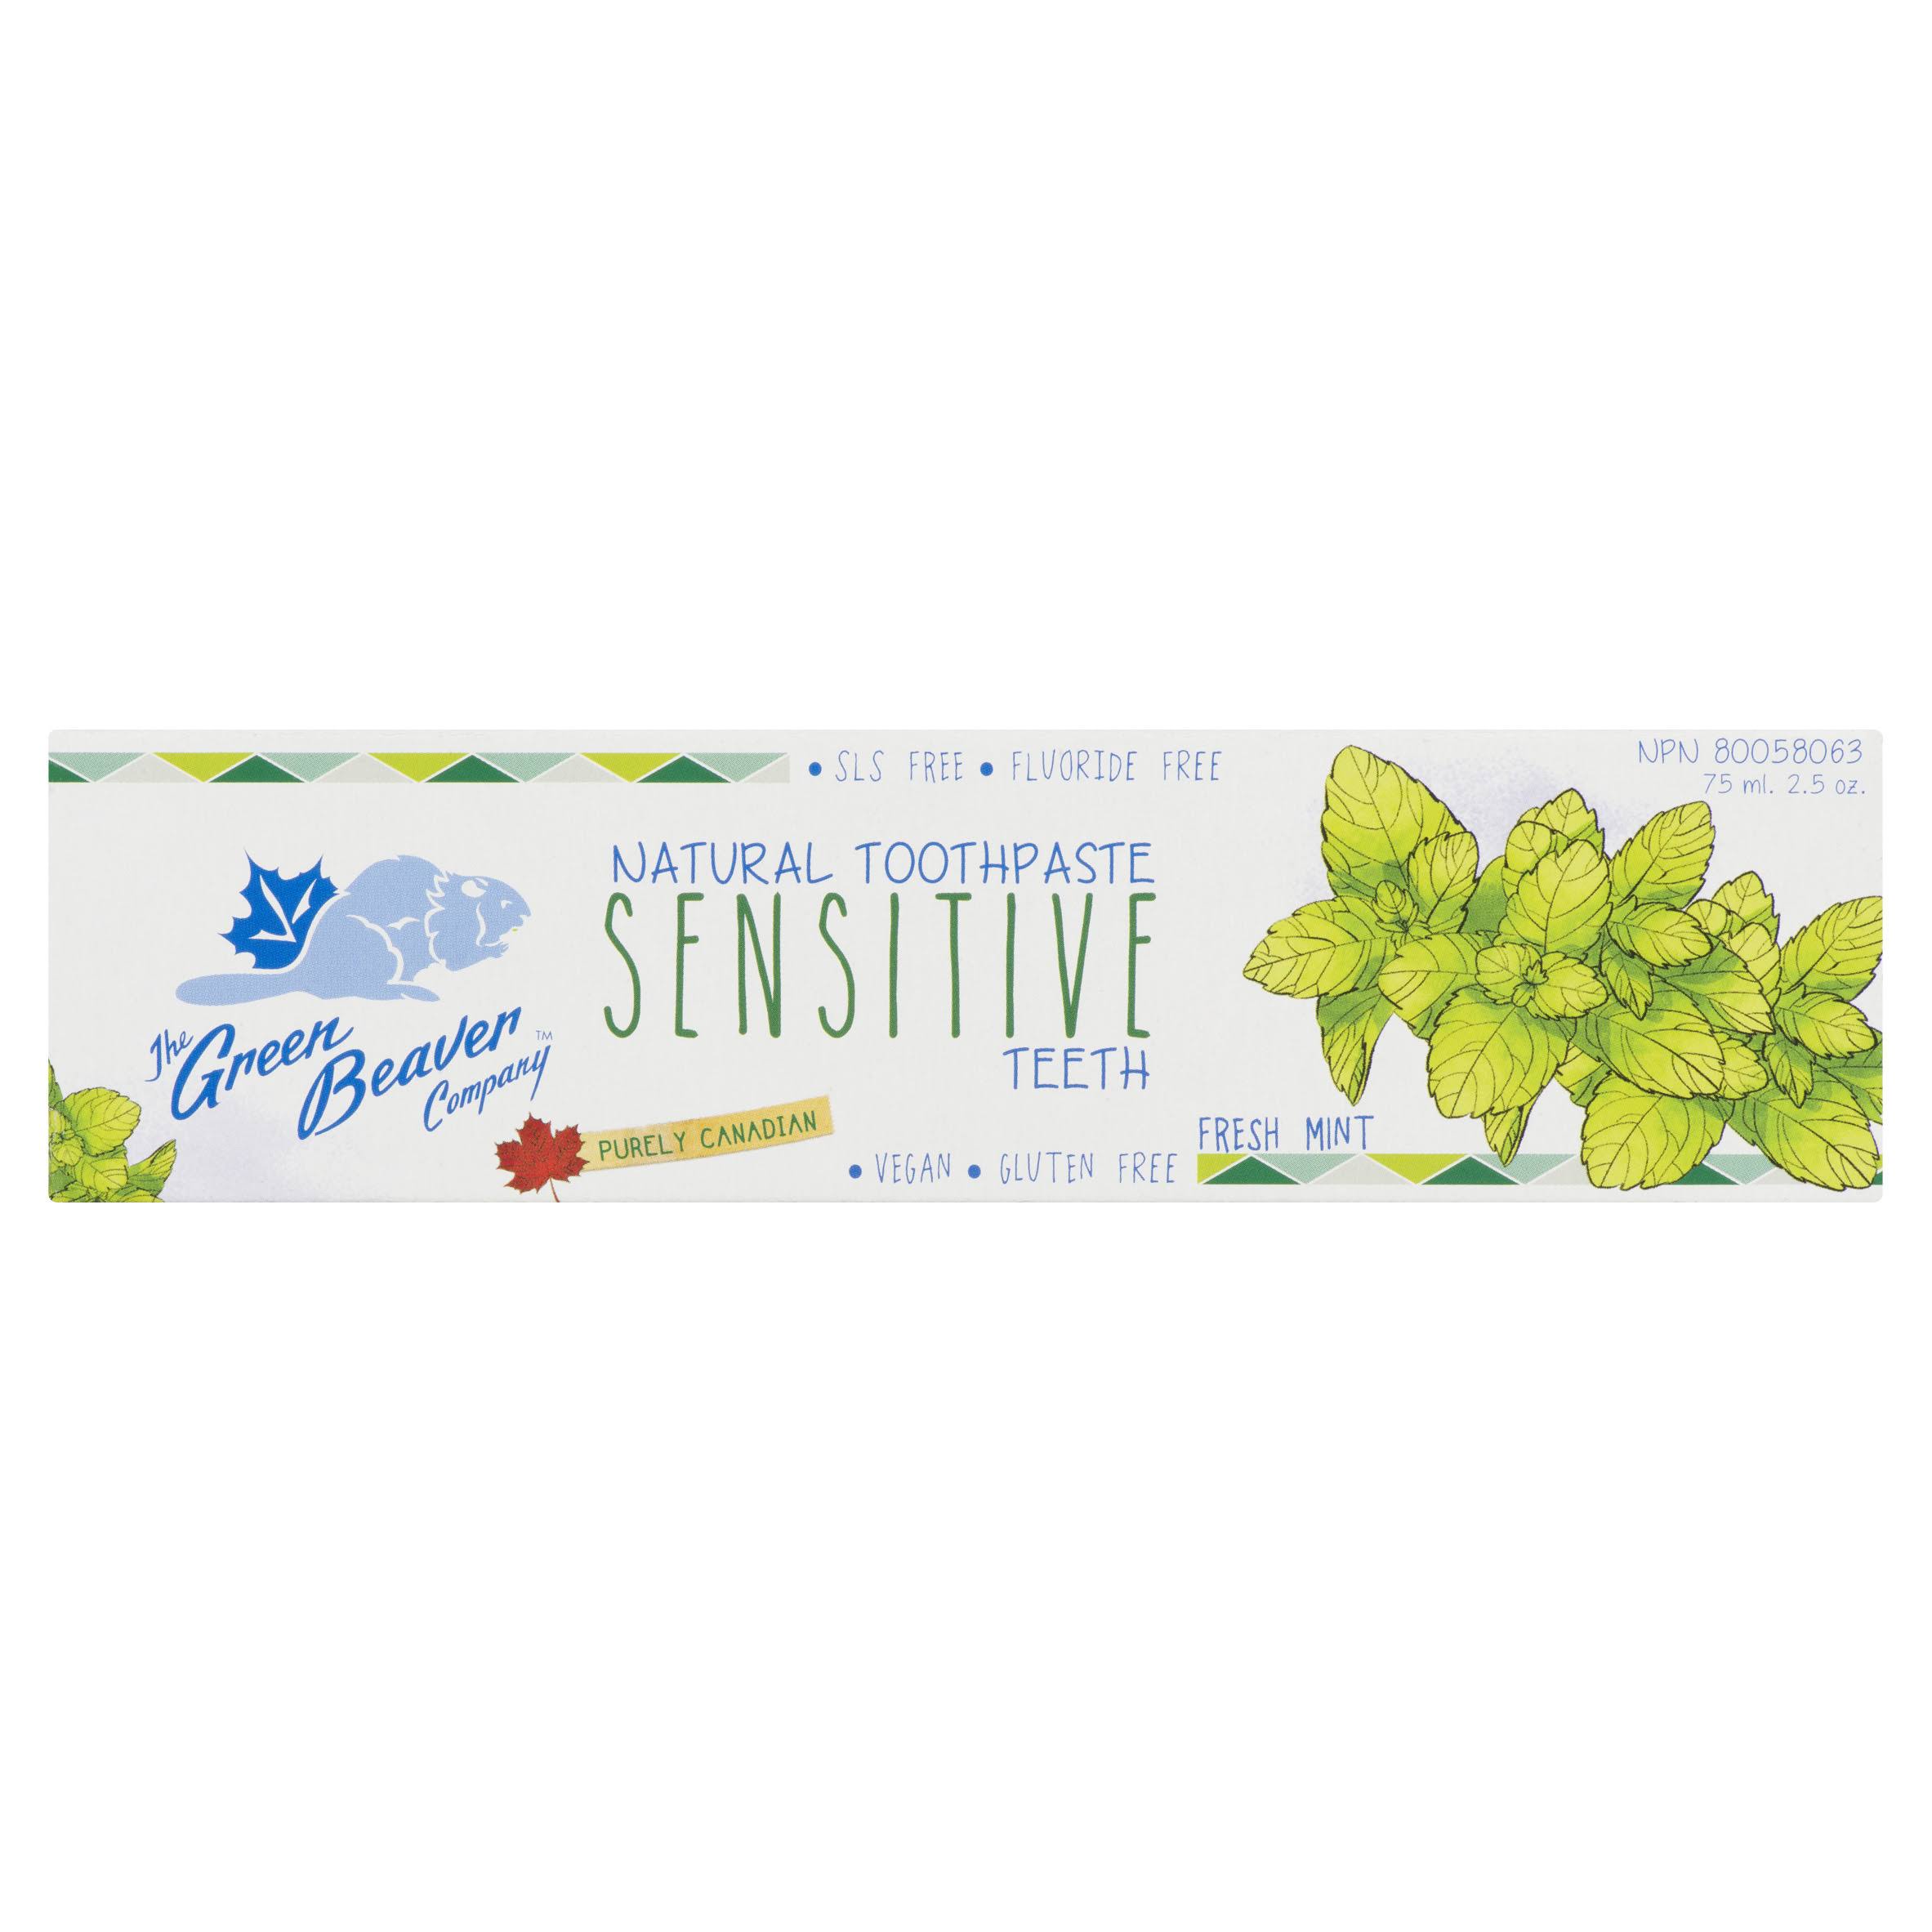 Green Beaver Sensitive Natural Toothpaste - Fresh Mint